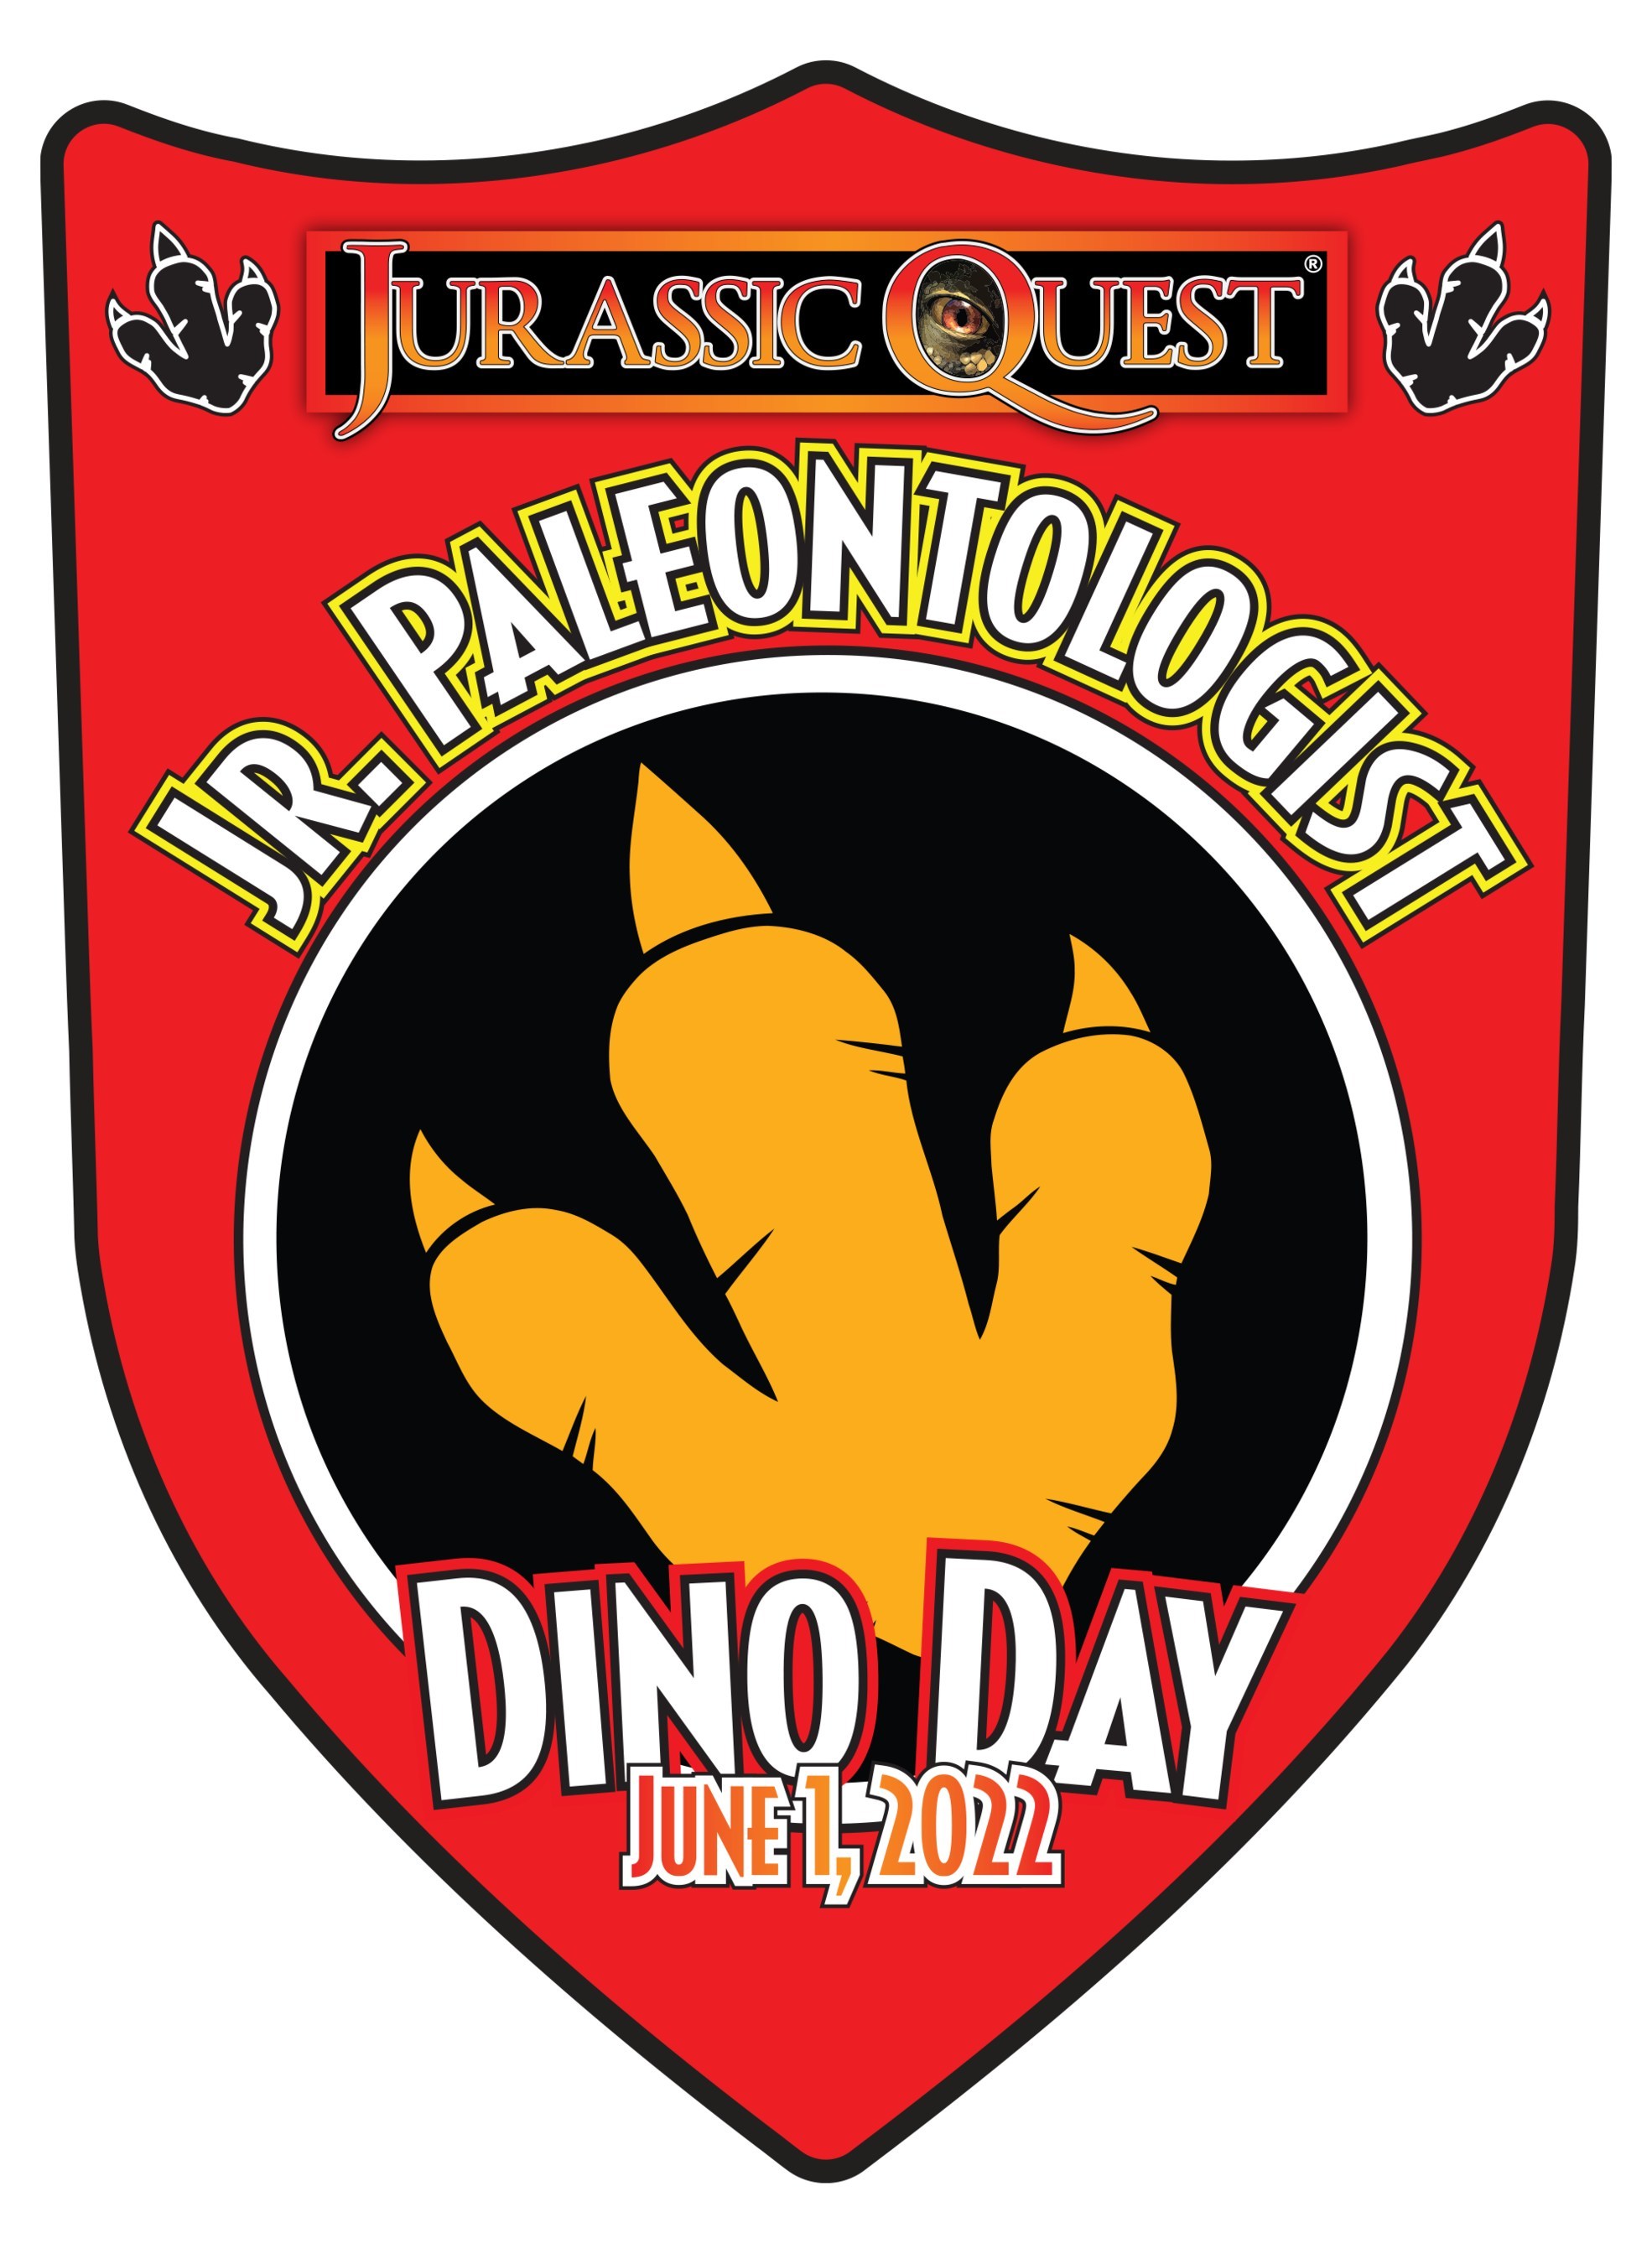 International Dino Day Participants will receive a commemorative Jurassic Quest International Dinosaur Day digital badge.